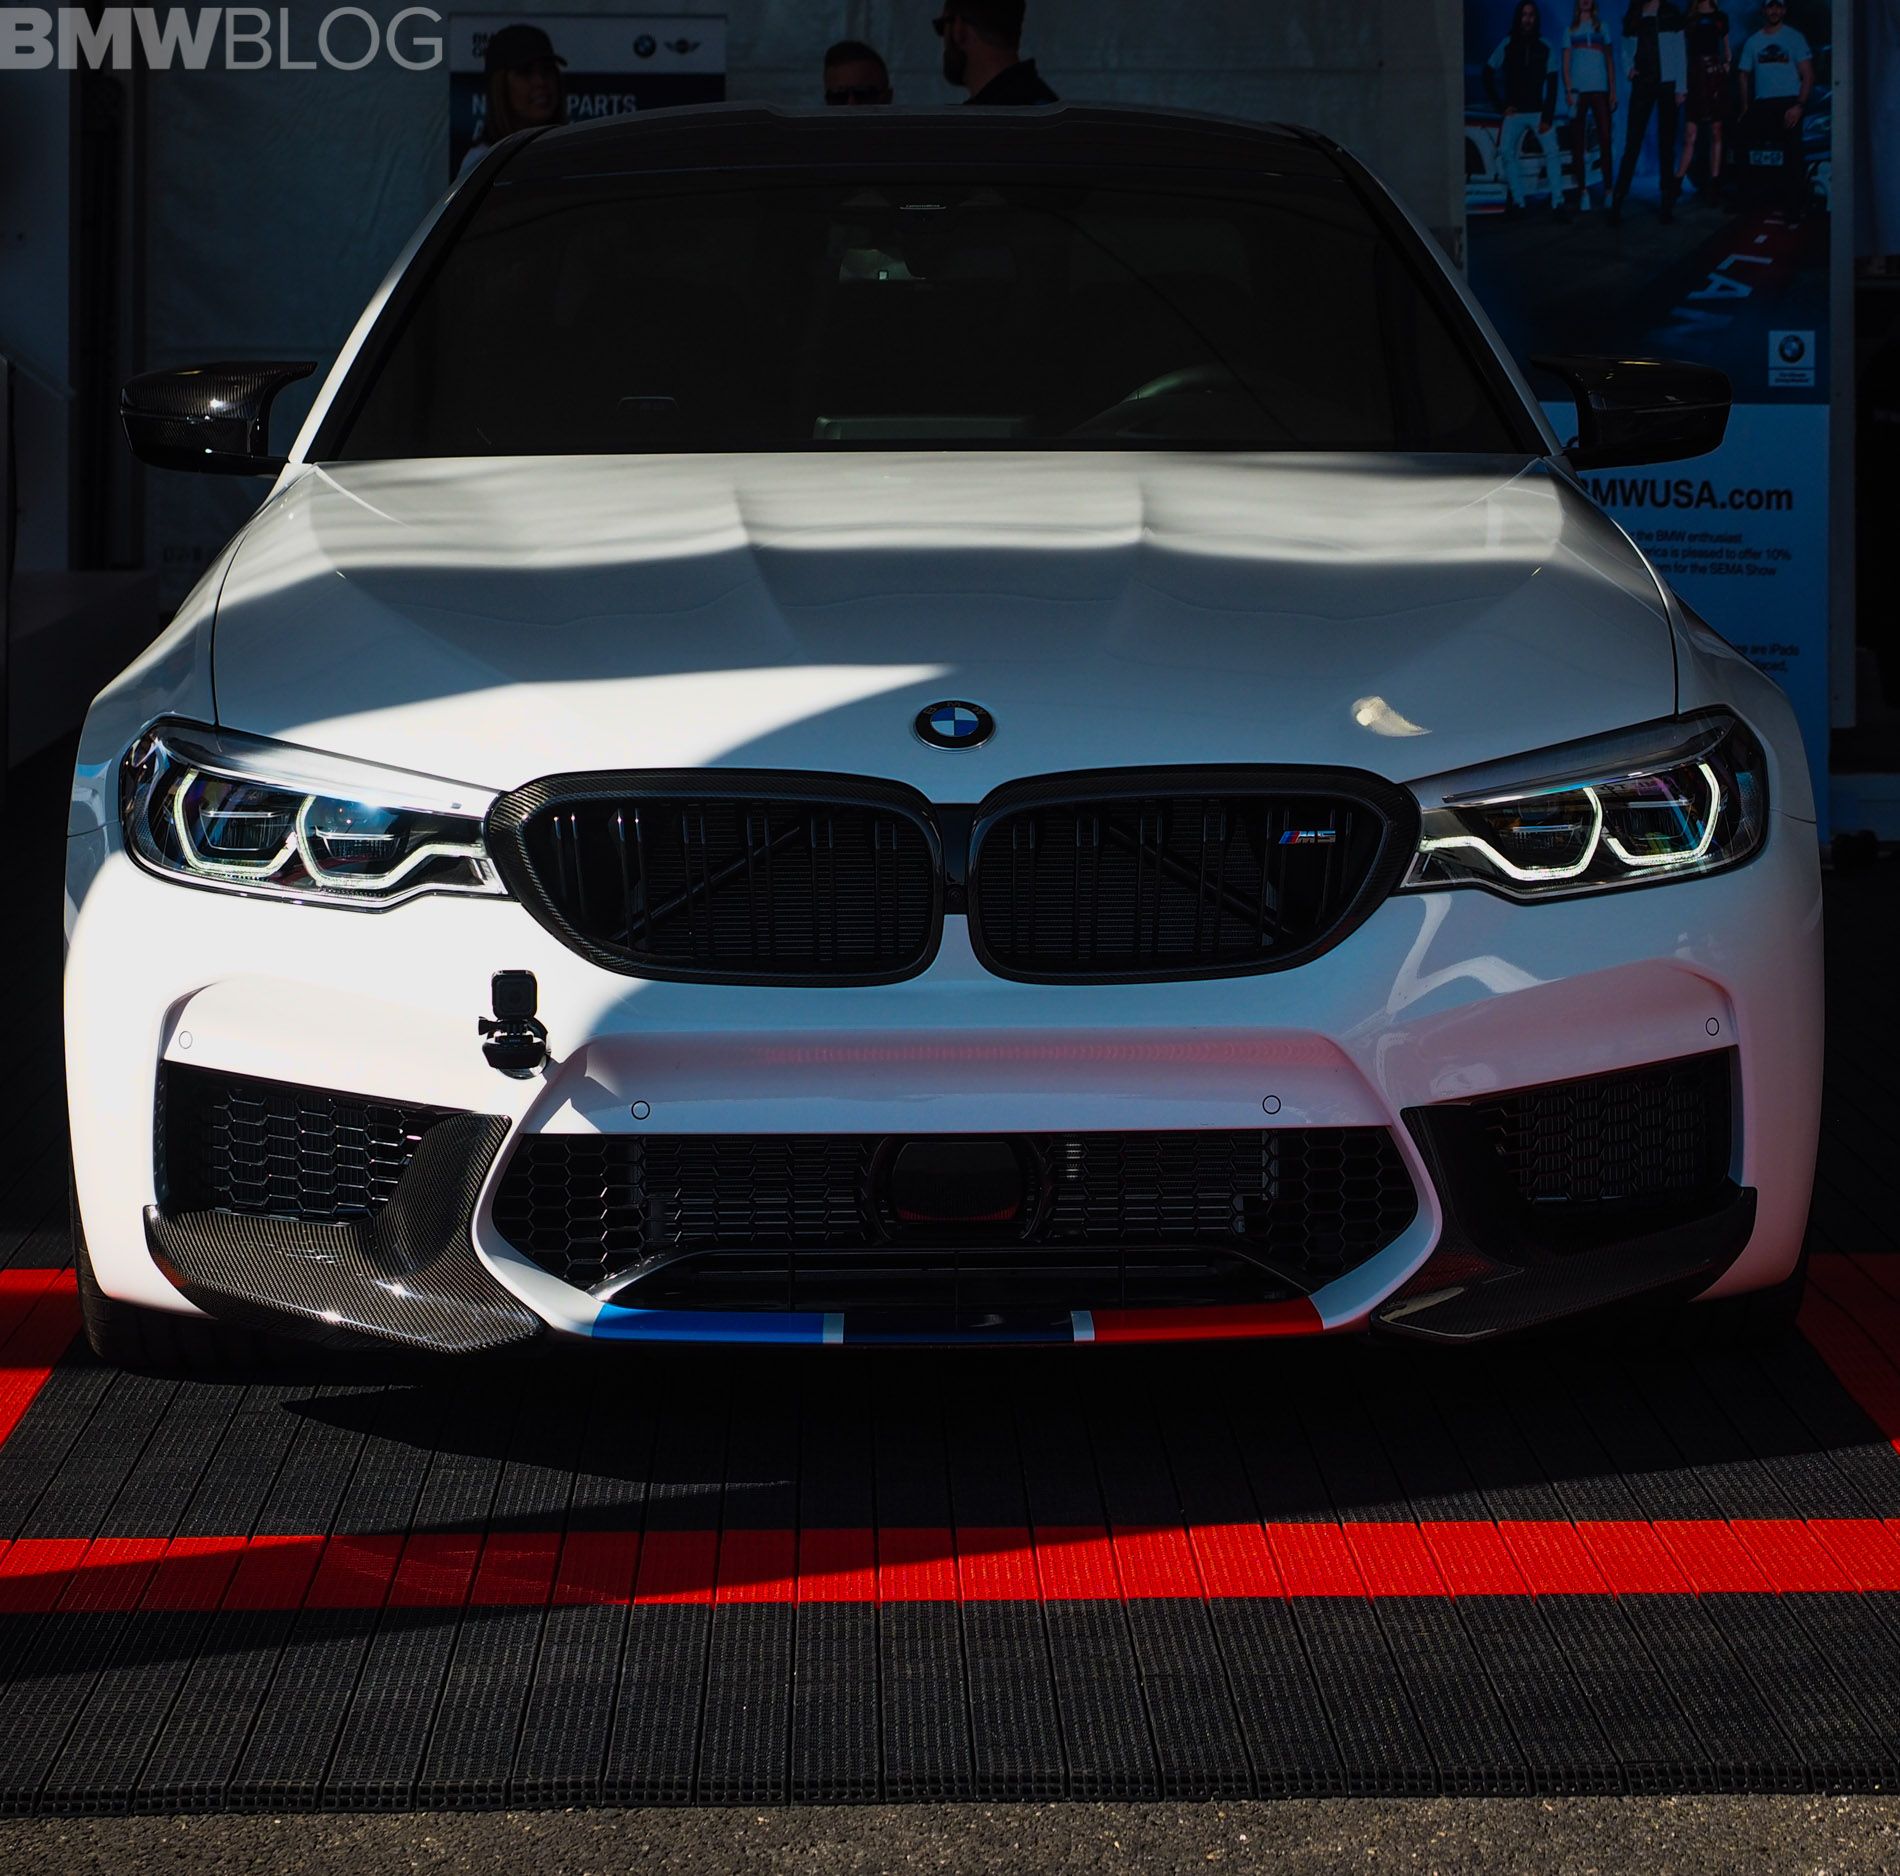 SEMA Live Photo: BMW F90 M5 with M Performance Parts